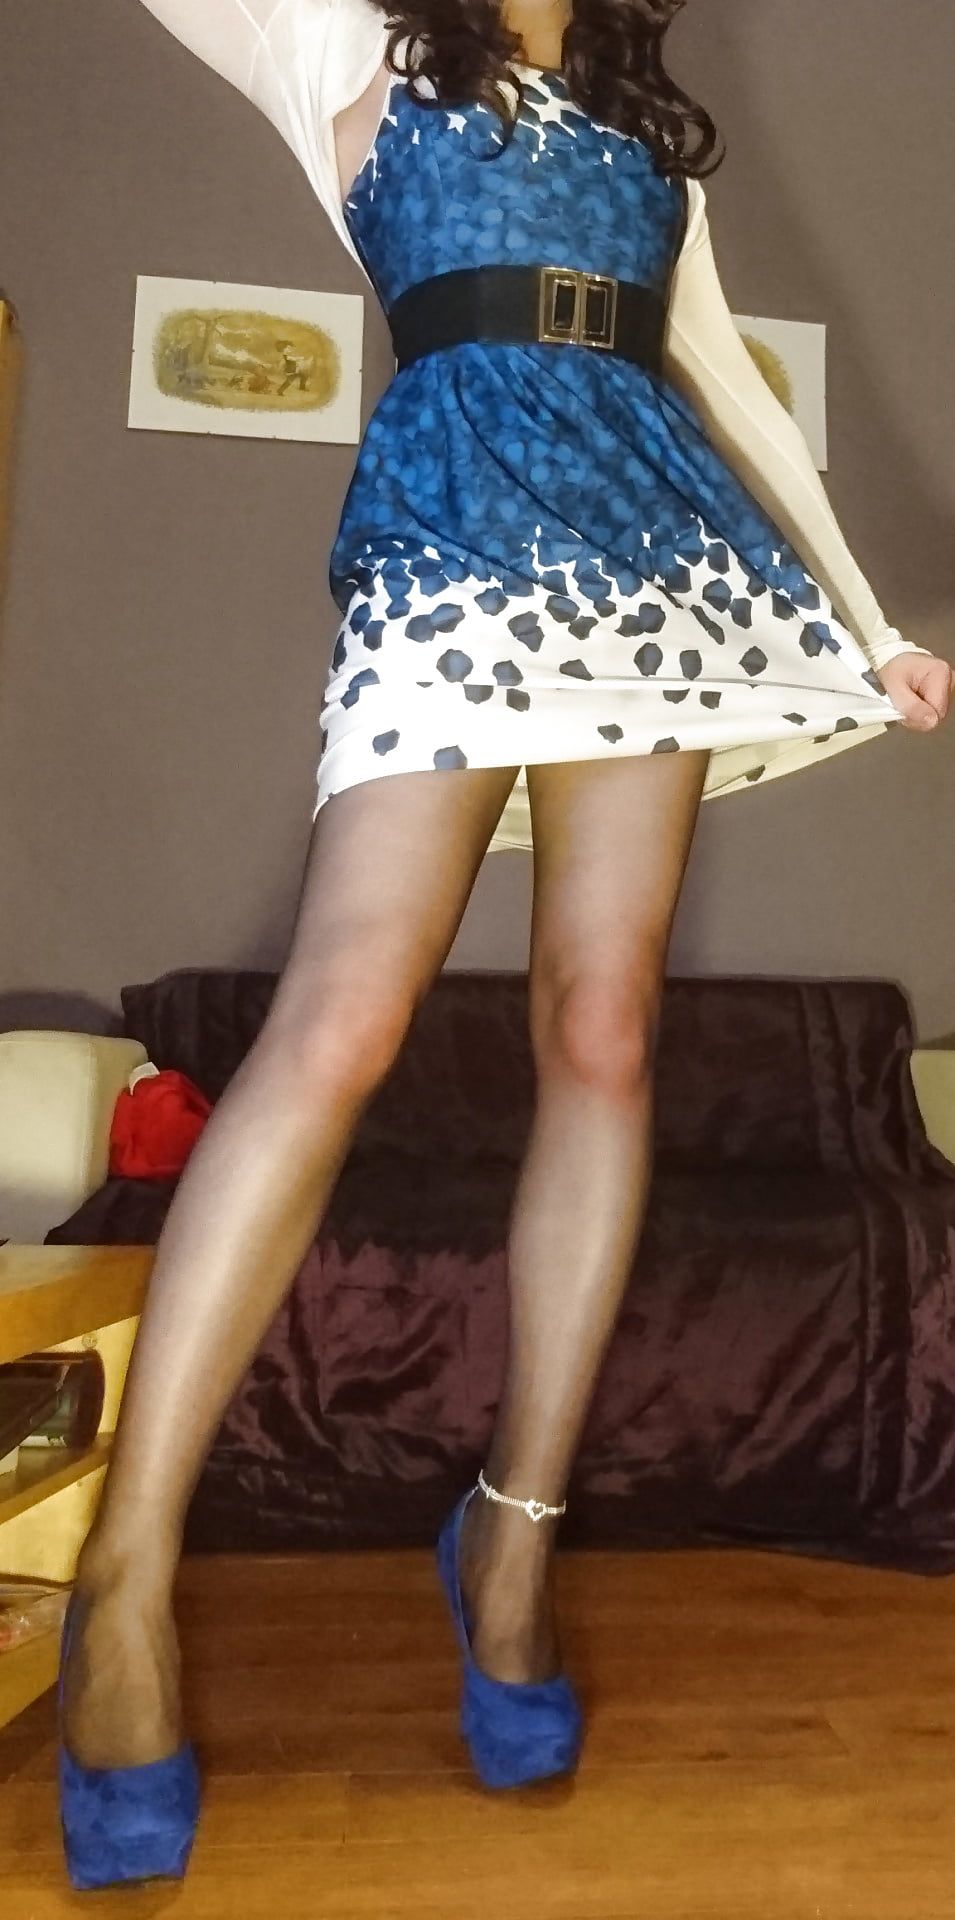 Marie crossdresser blue dress and sheer pantyhose #6